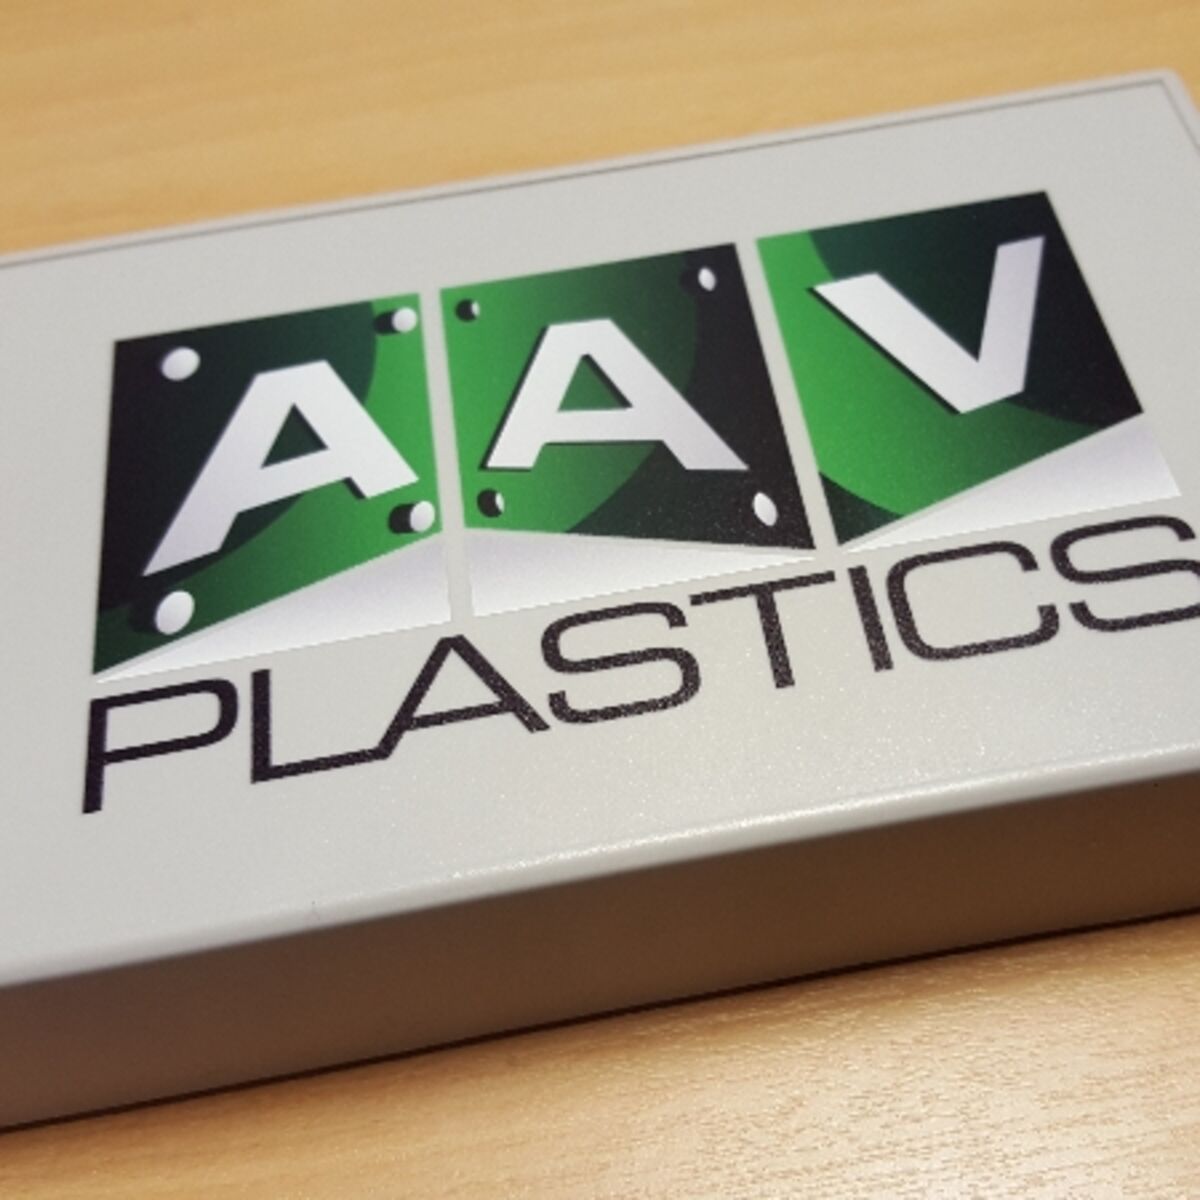 AAV Plastics